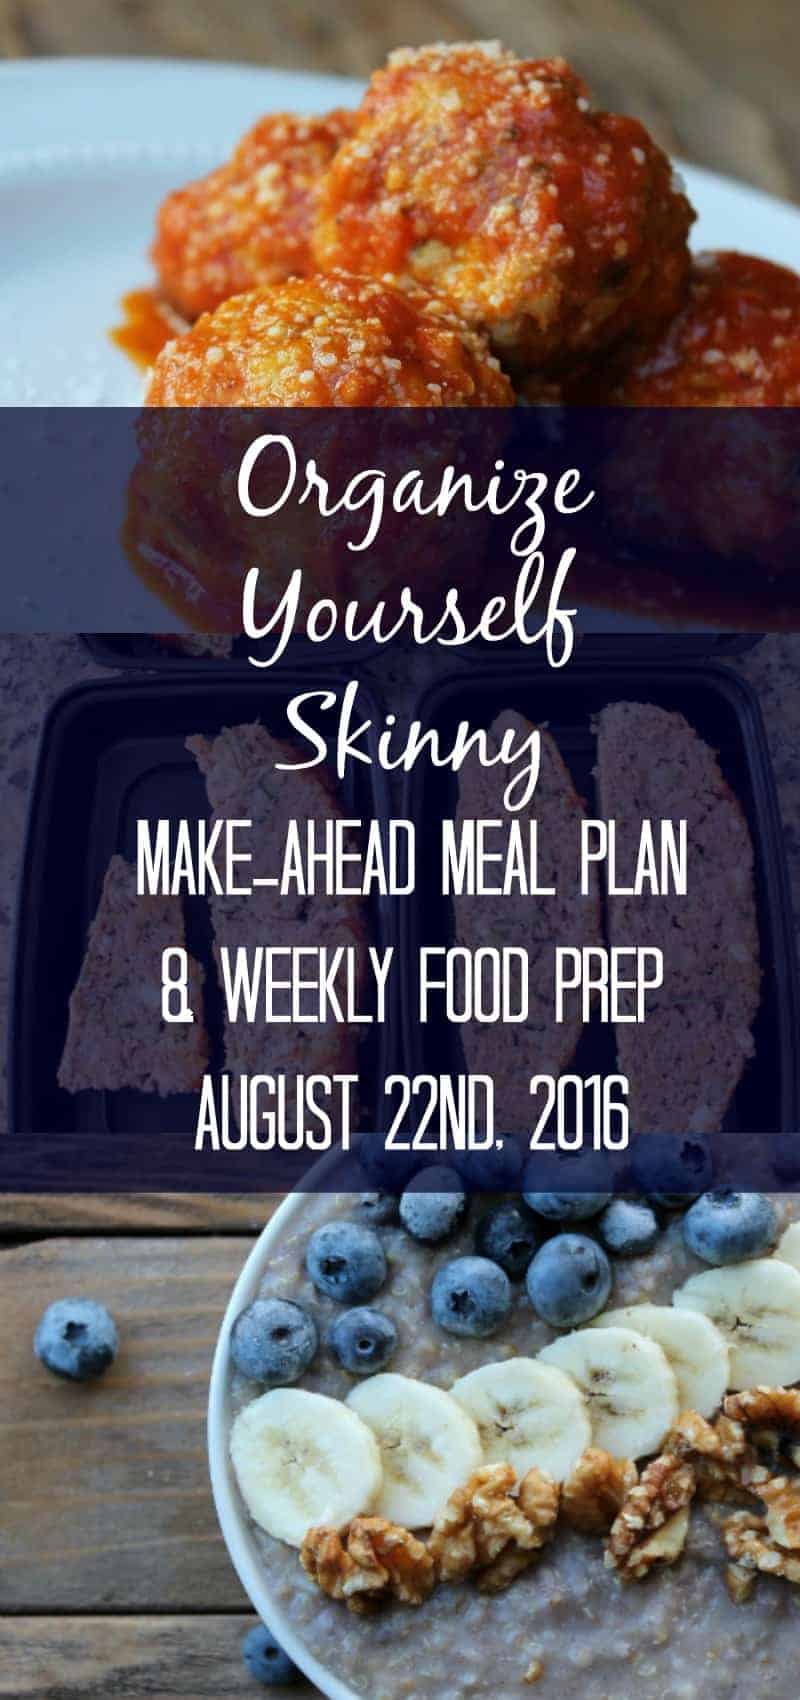 Organize Yourself Skinny Make-ahead Meal Plan & Weekly Food Prep